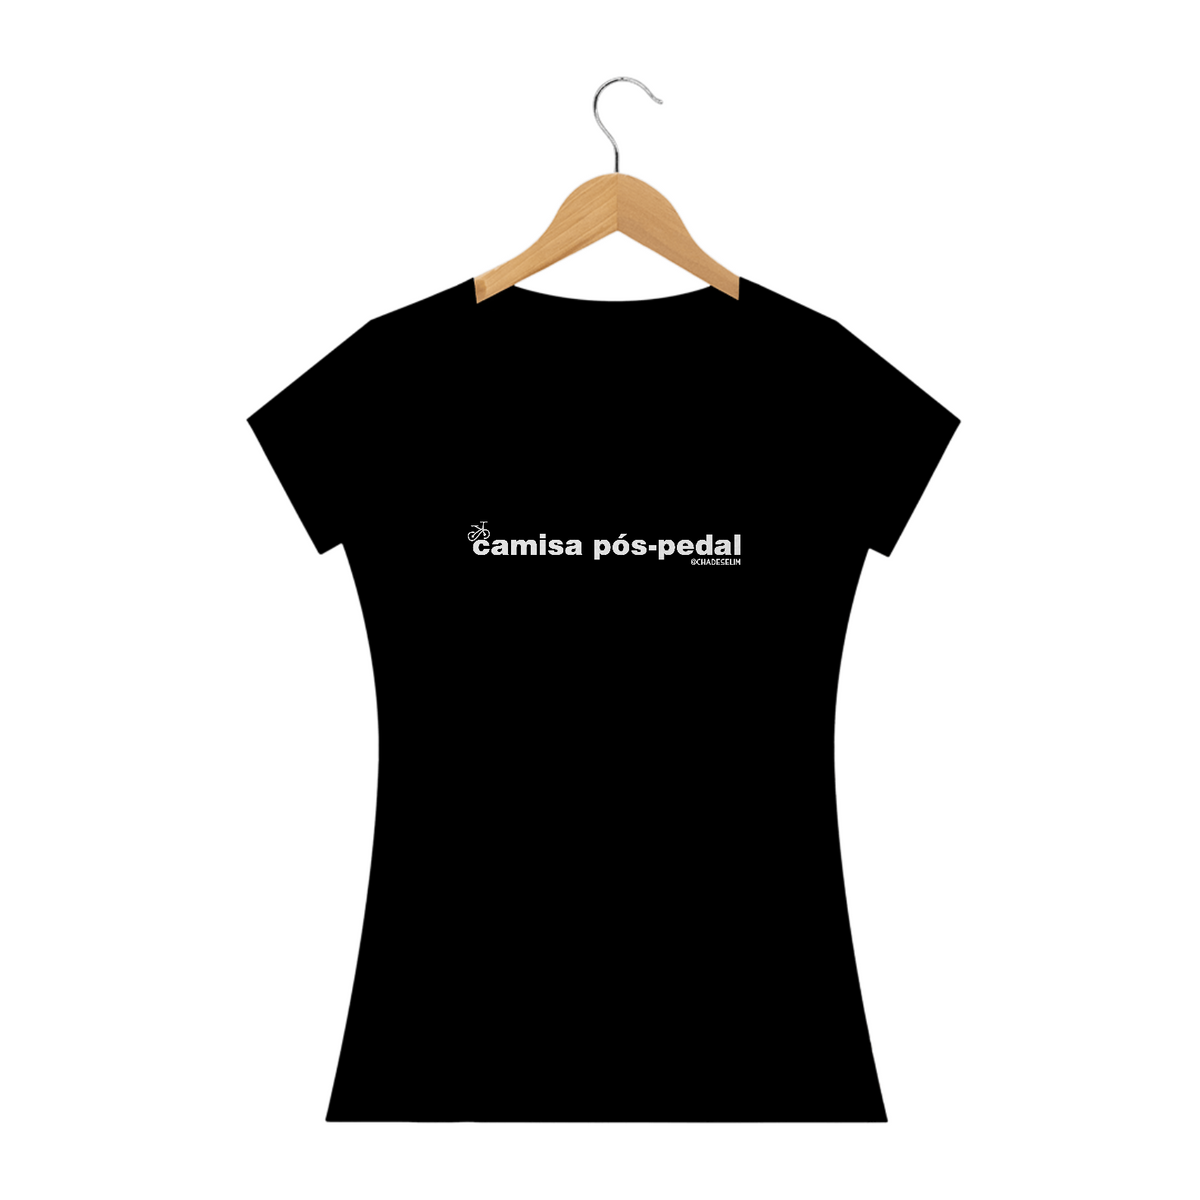 Nome do produto: Camisa pós-pedal BABY LONG Feminina